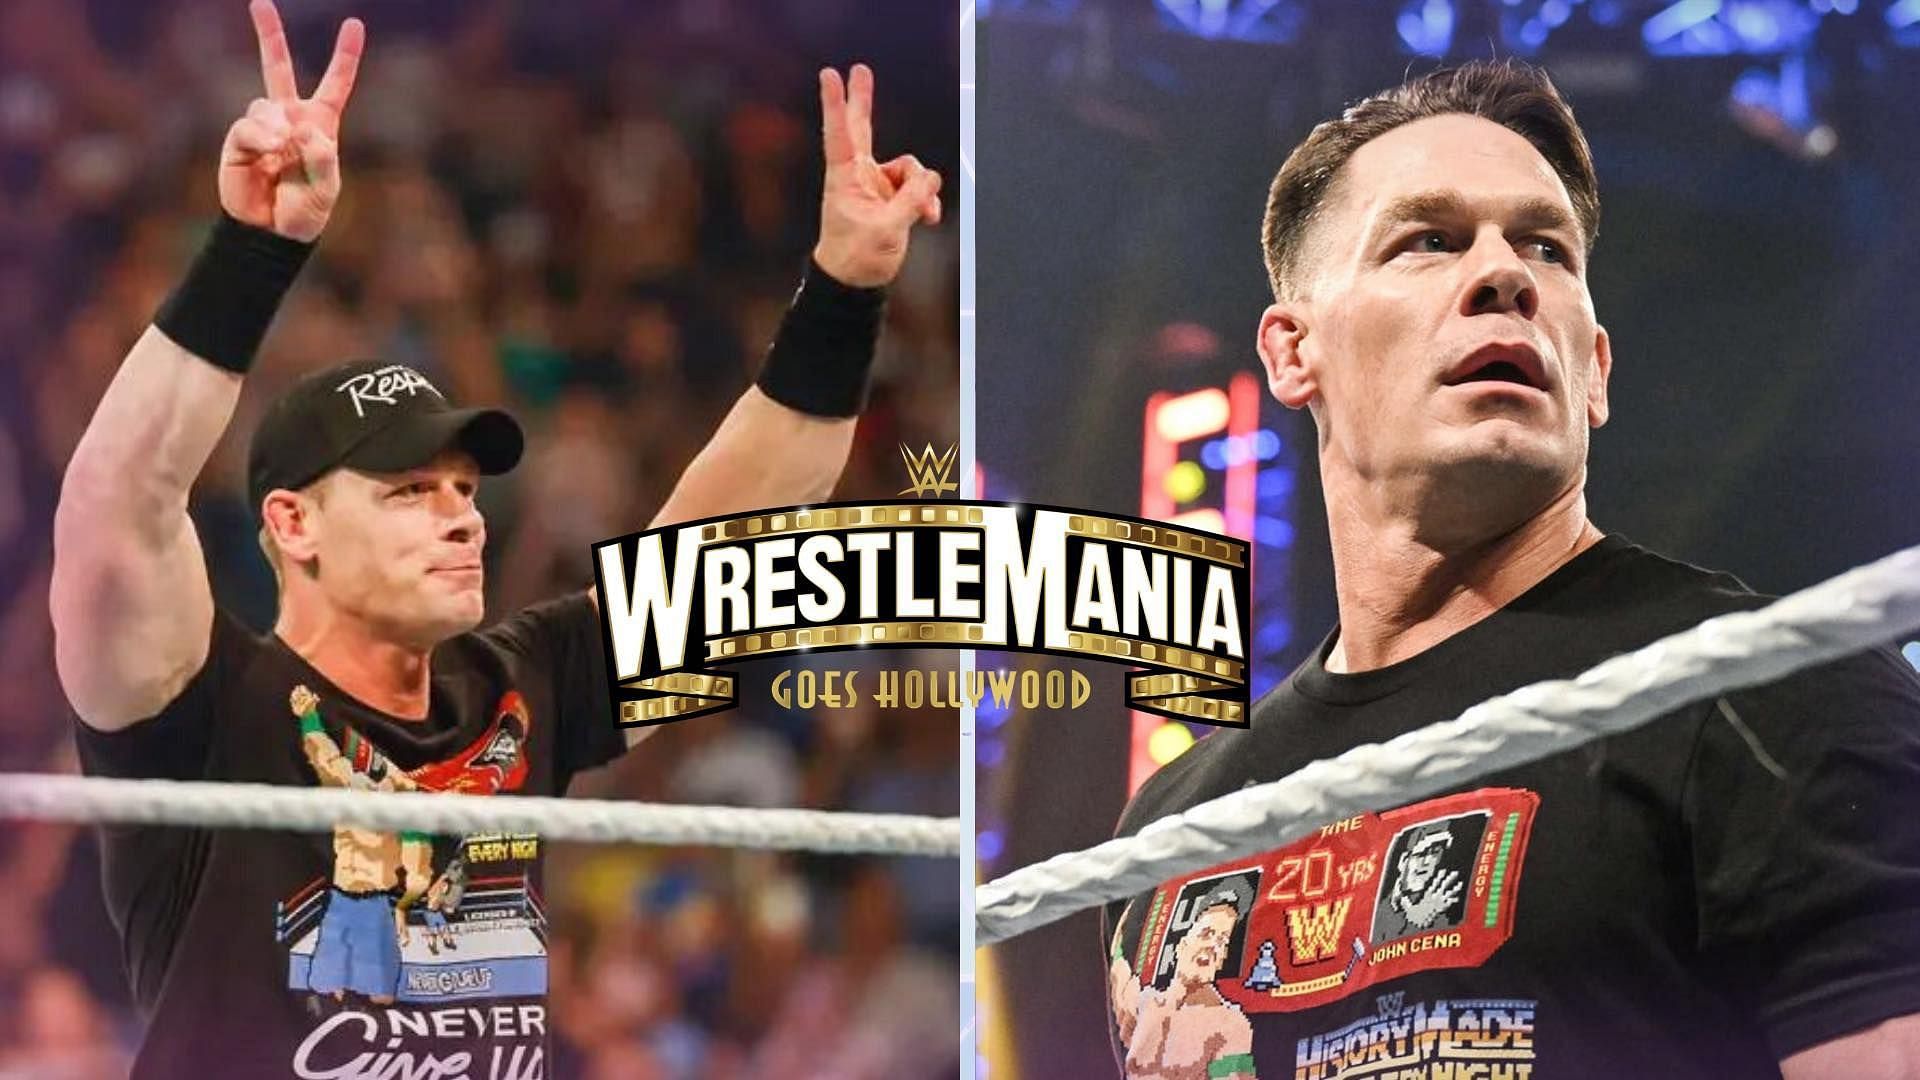 John Cena is a former WWE Champion.